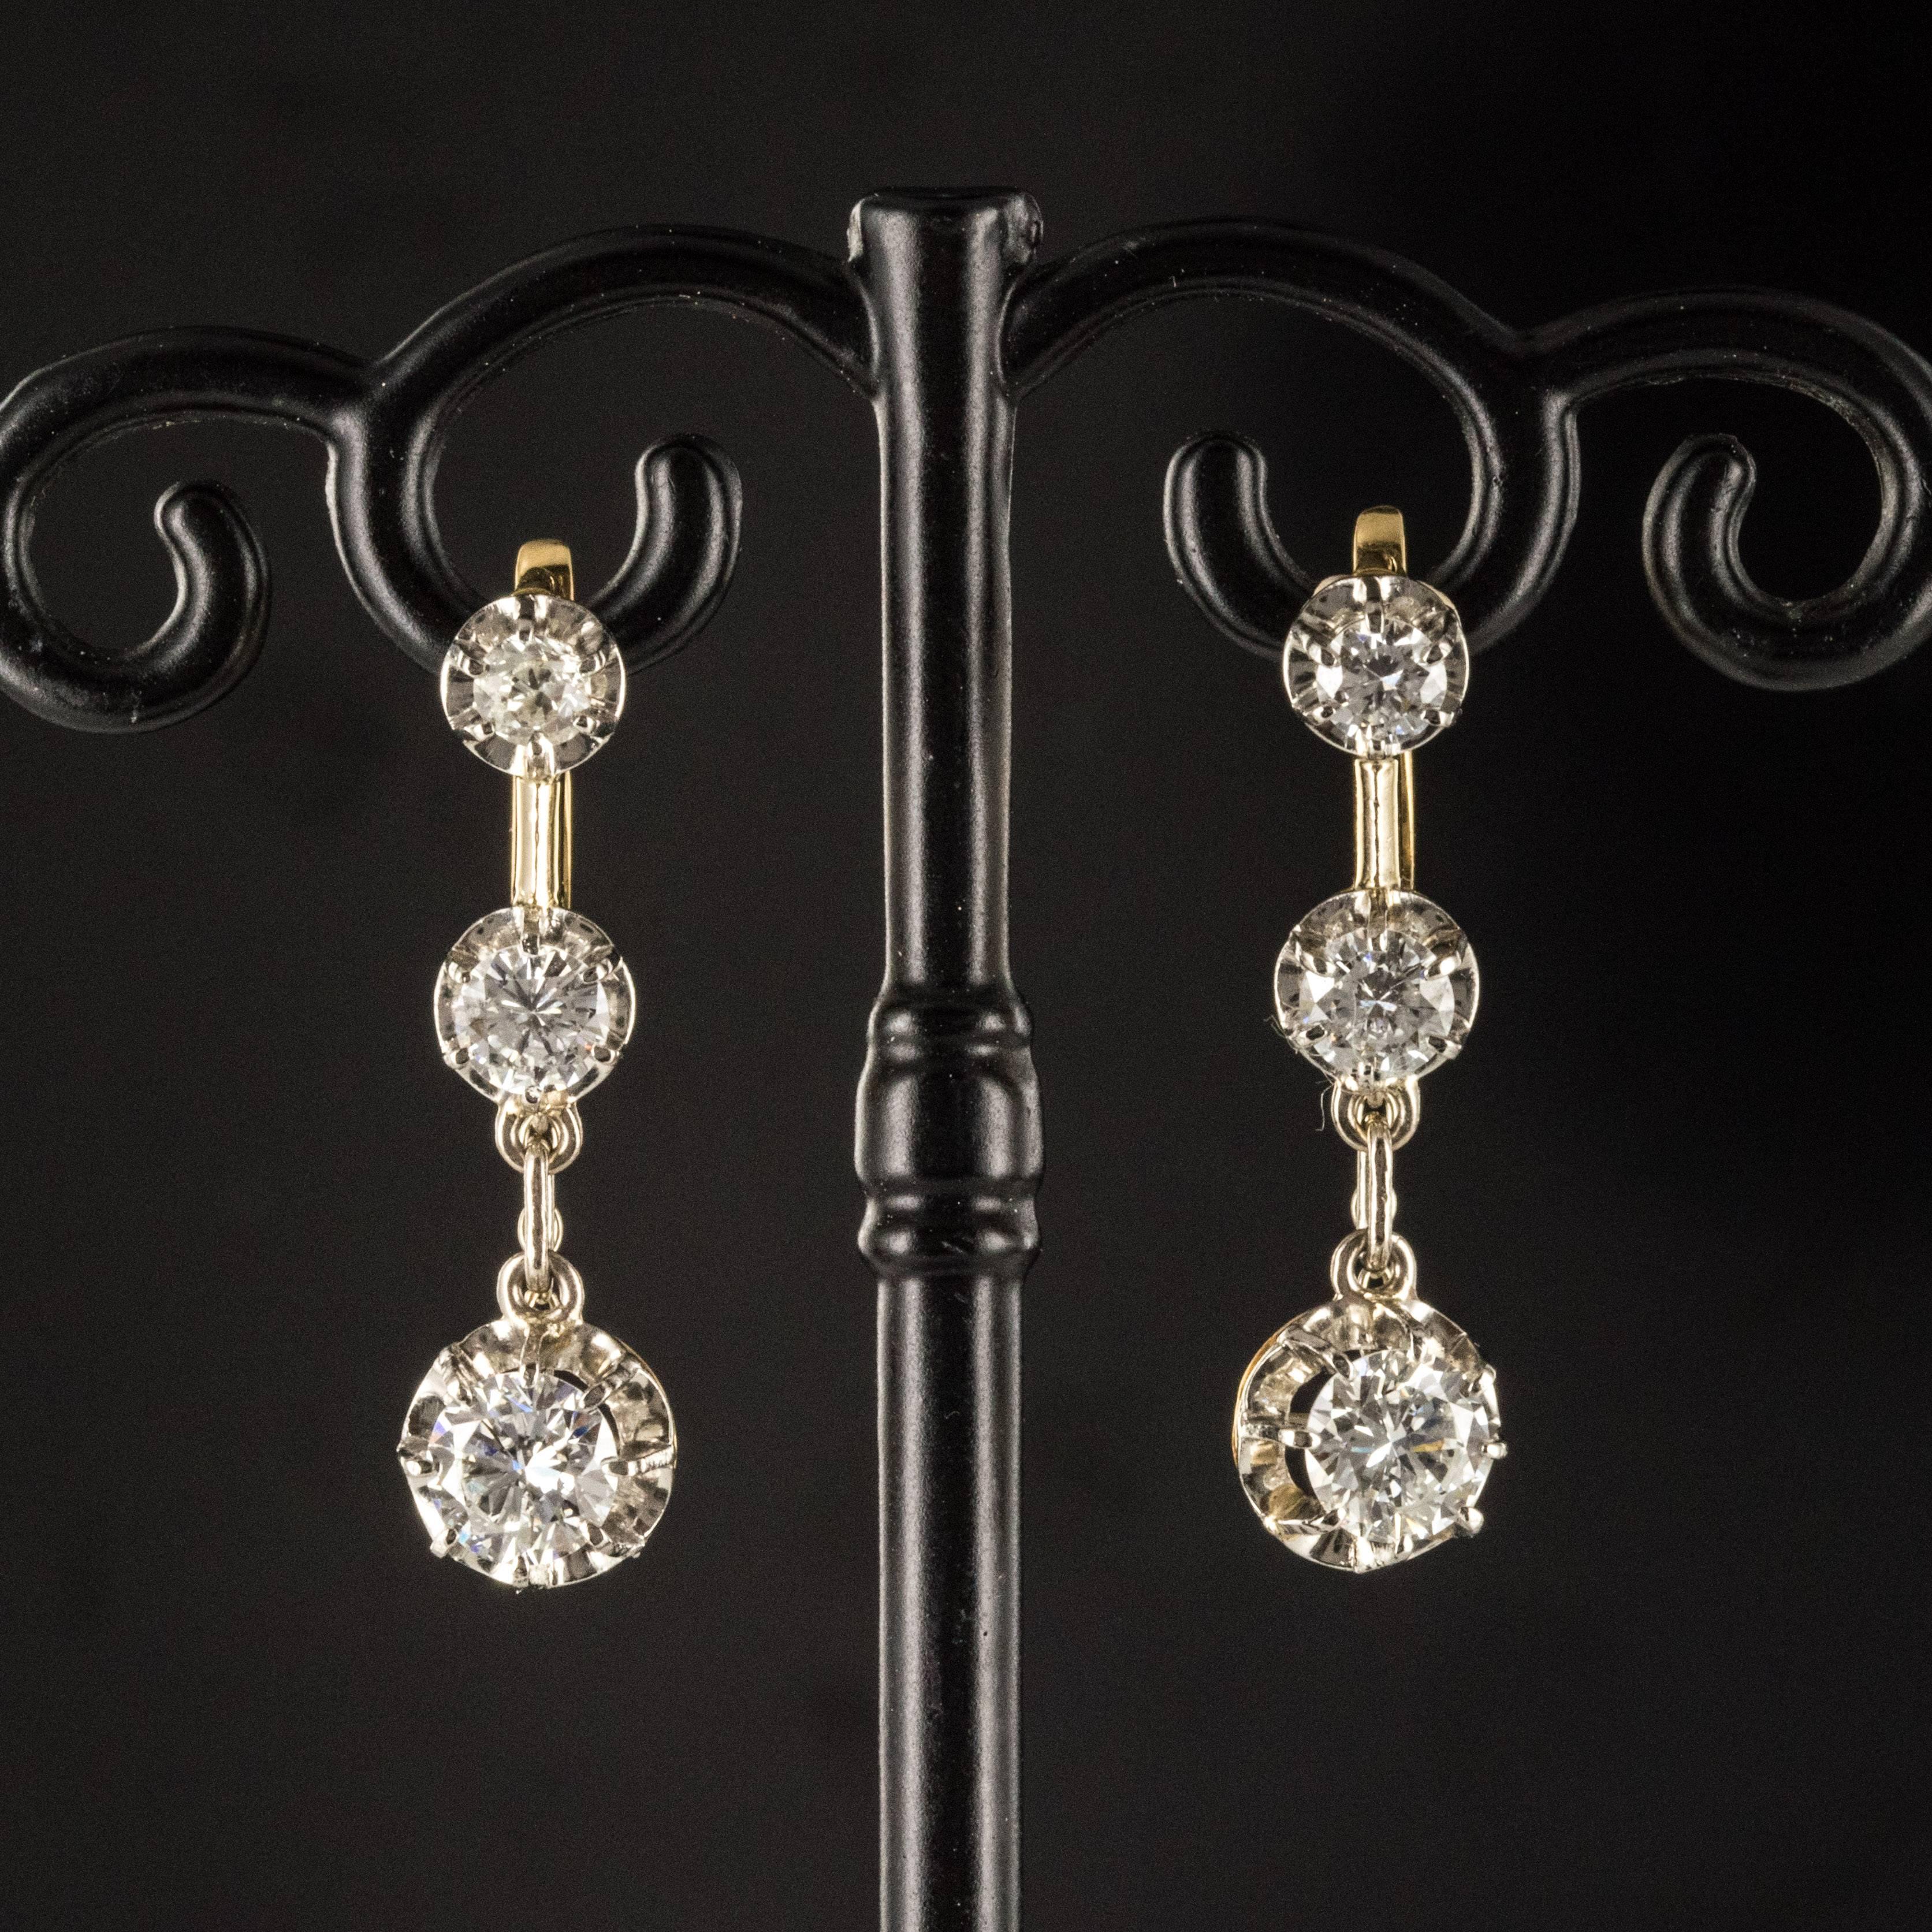 3 diamond dangle earrings